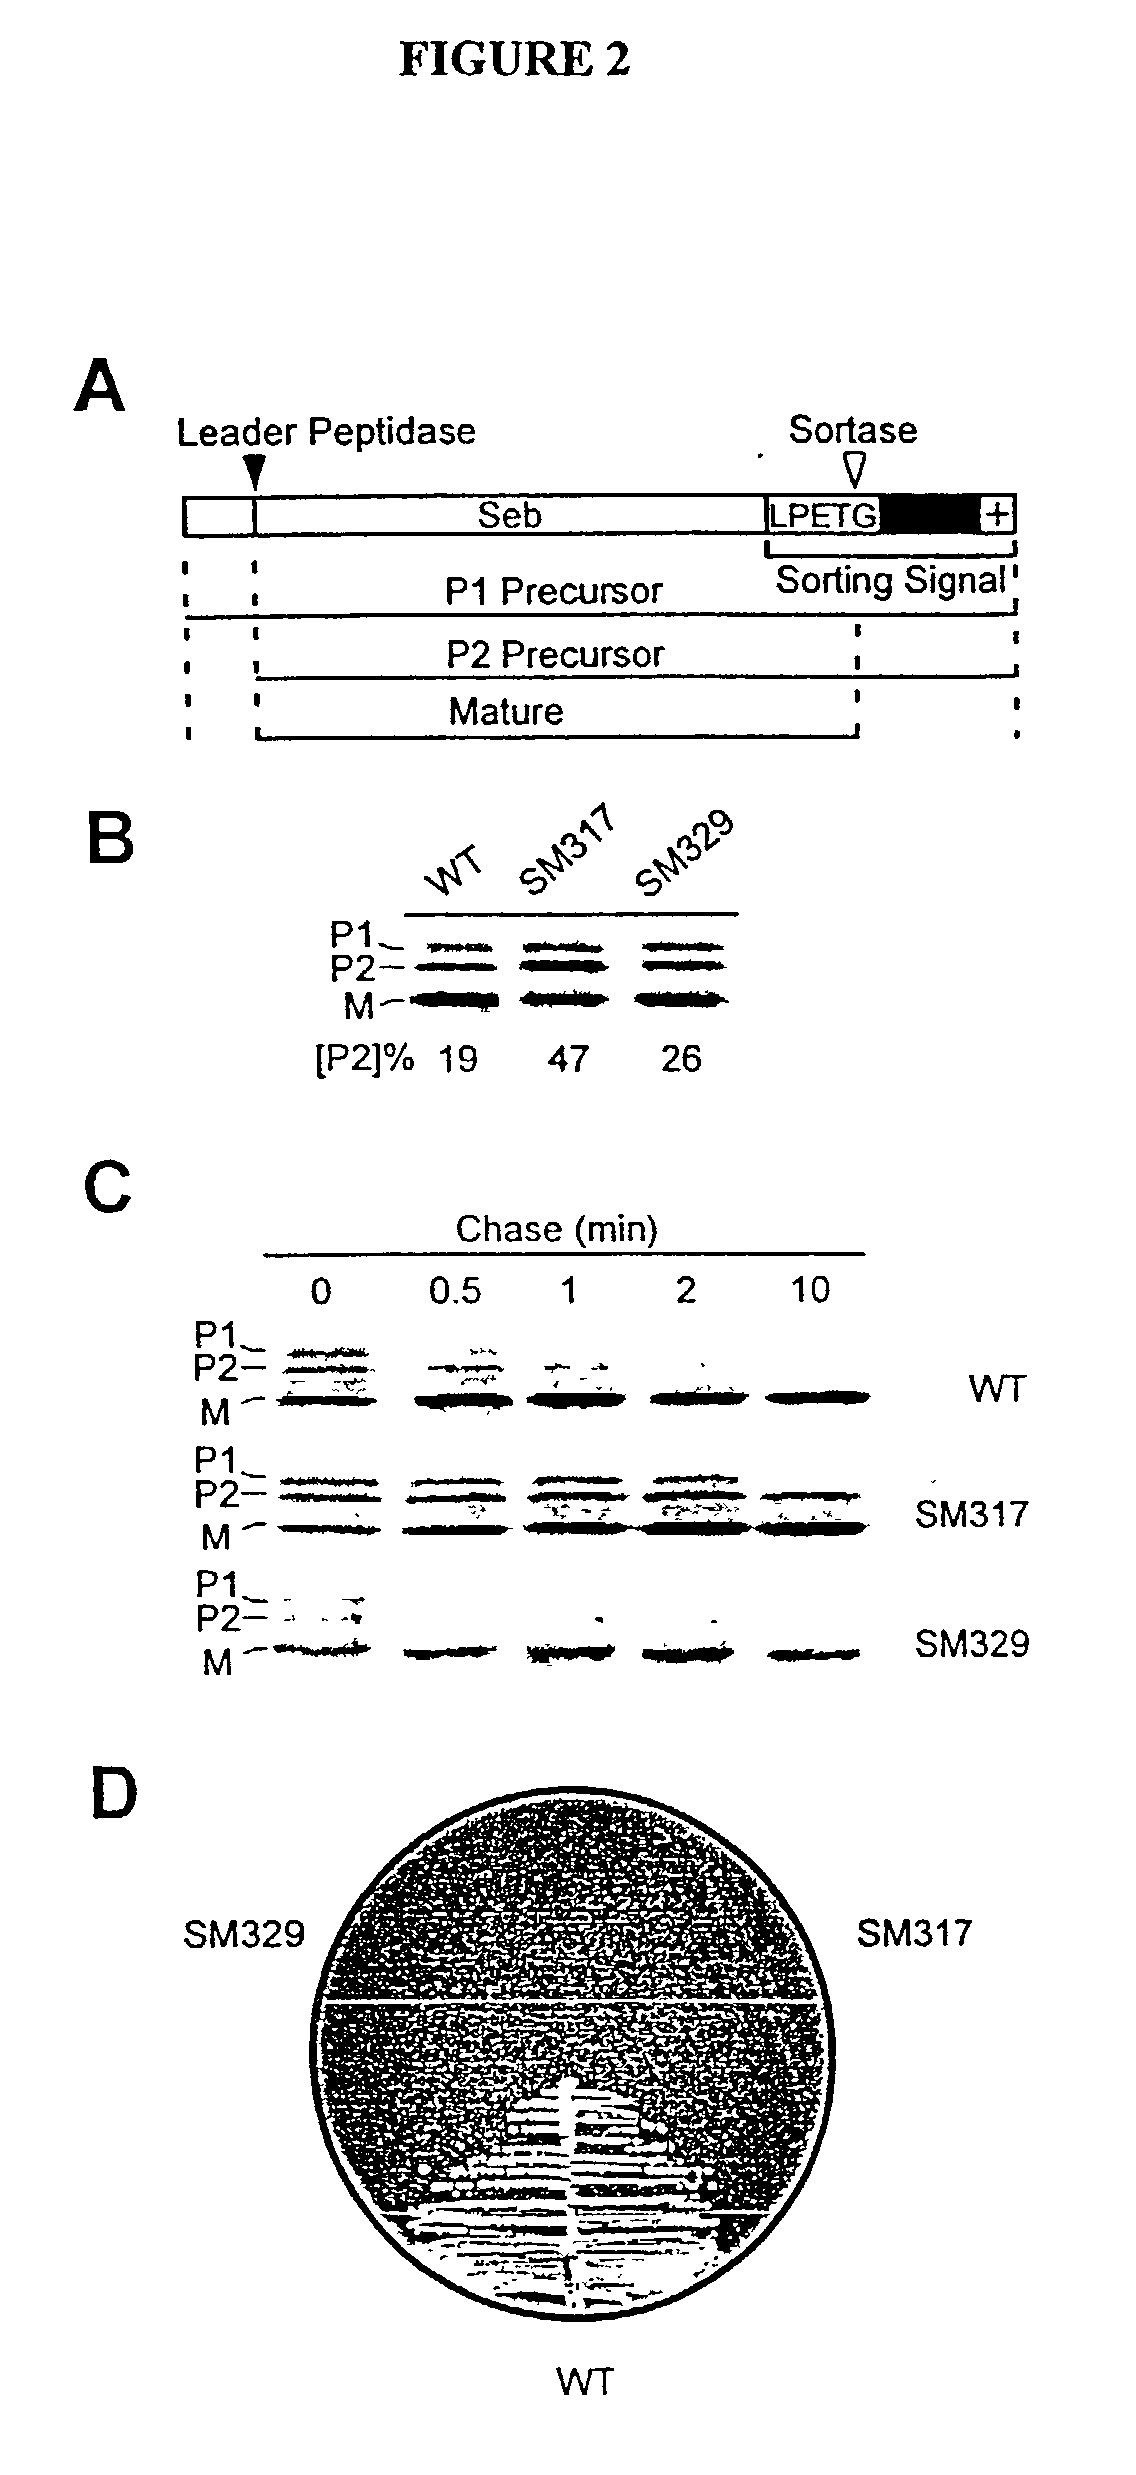 Identification of sortase gene